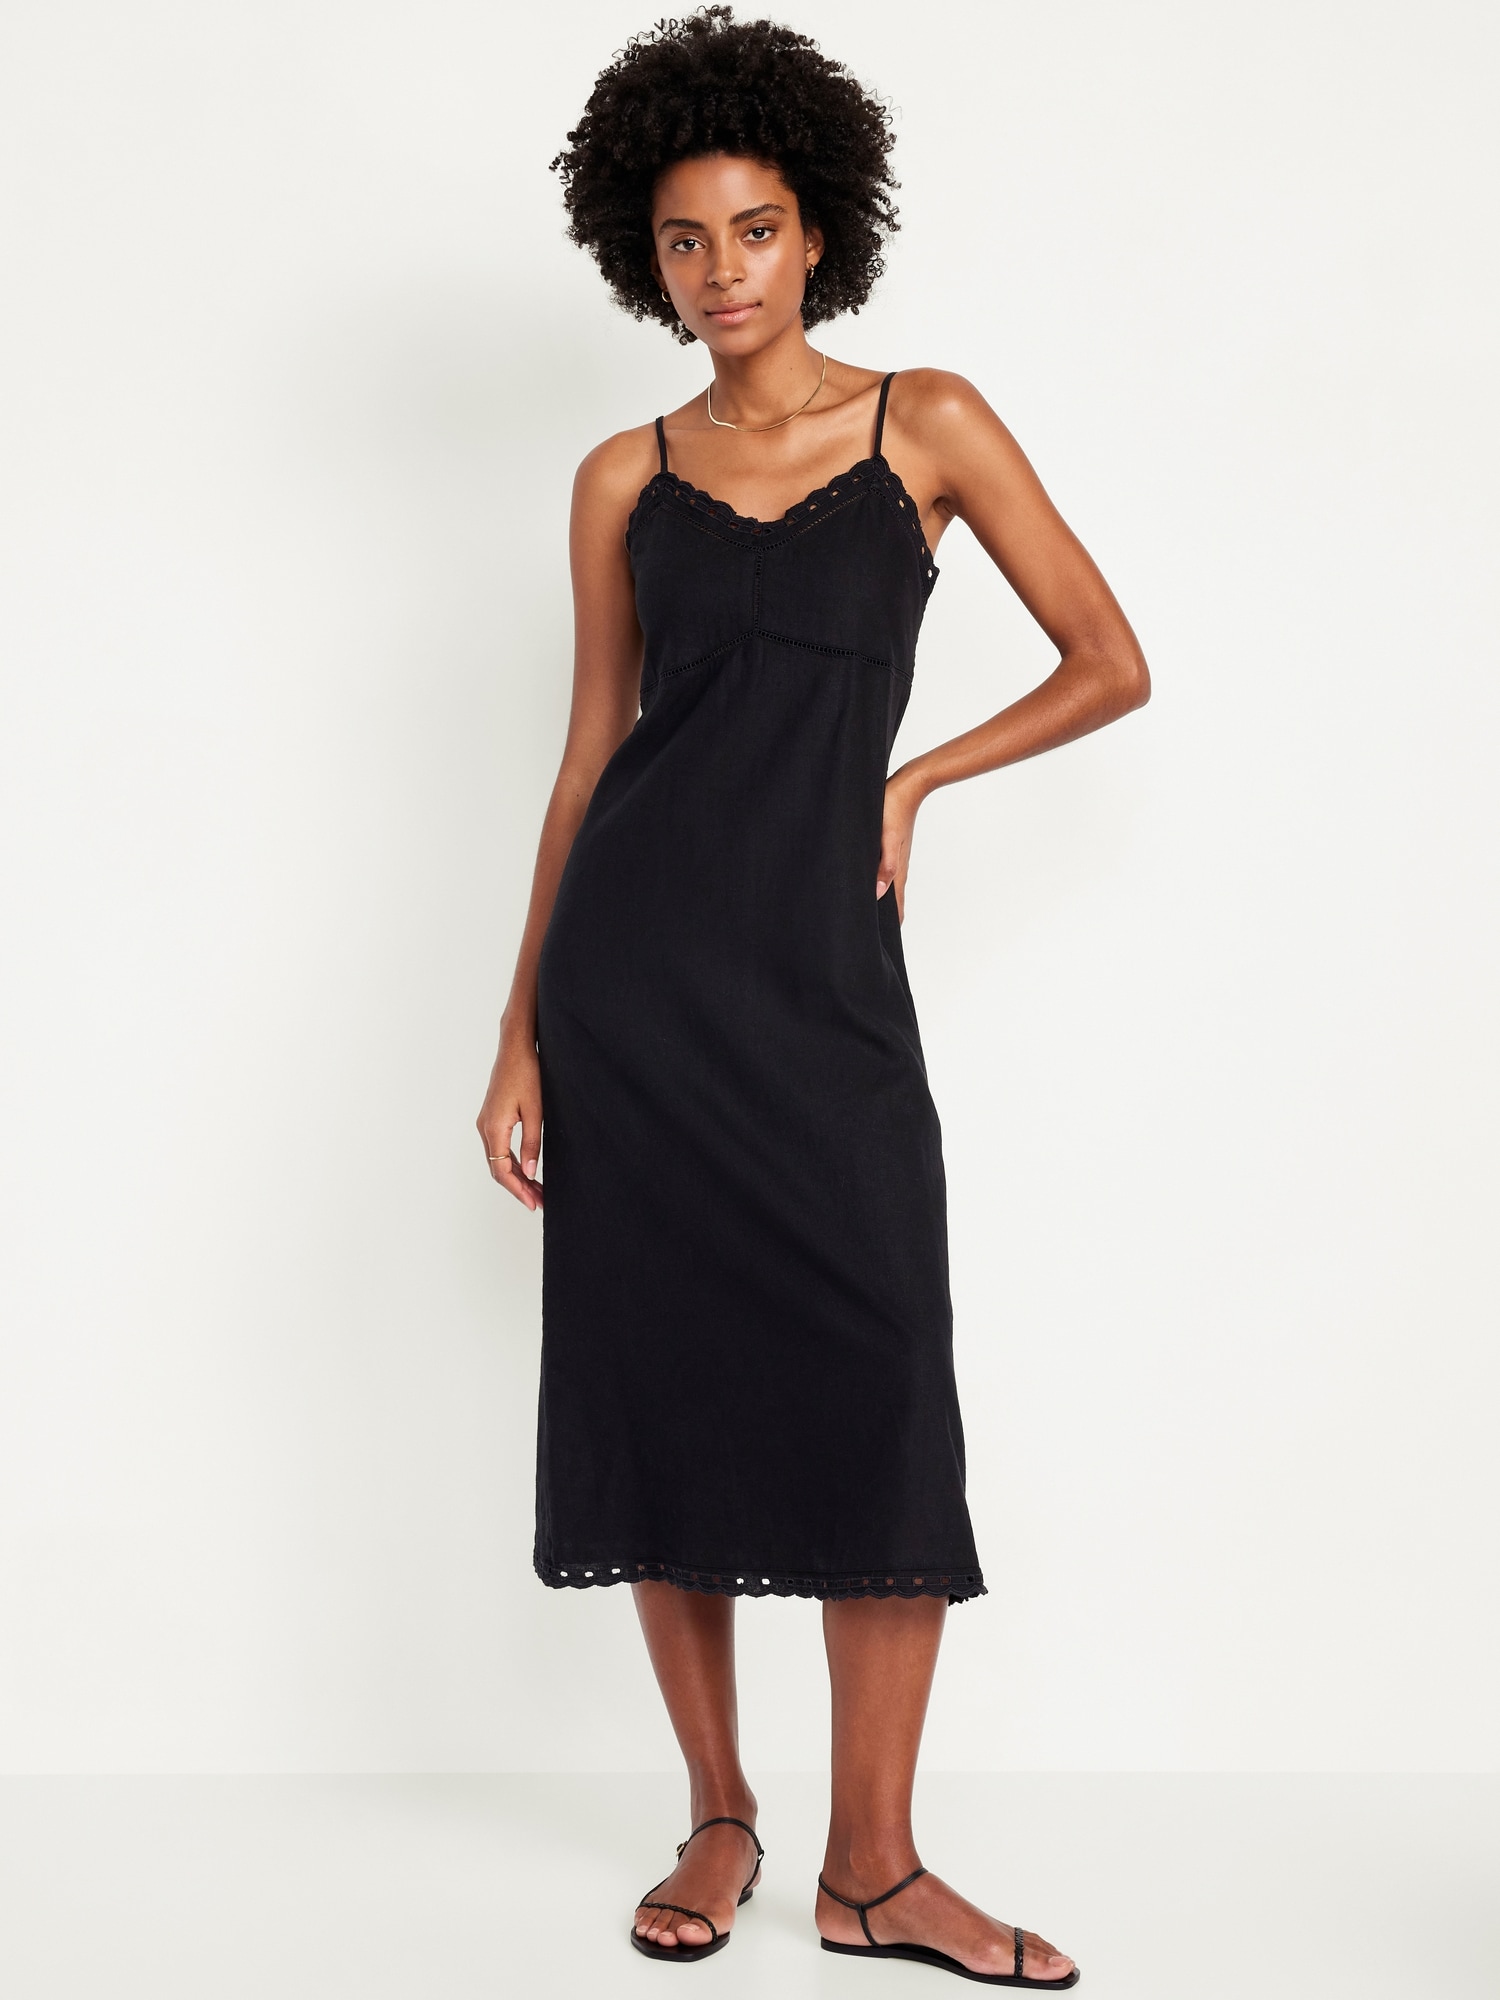 Shop dresses | Women's Fashion Clothing | Sizes 0-36W Custom Dresses,  Women's Tops & Skirts - Shop eShakti